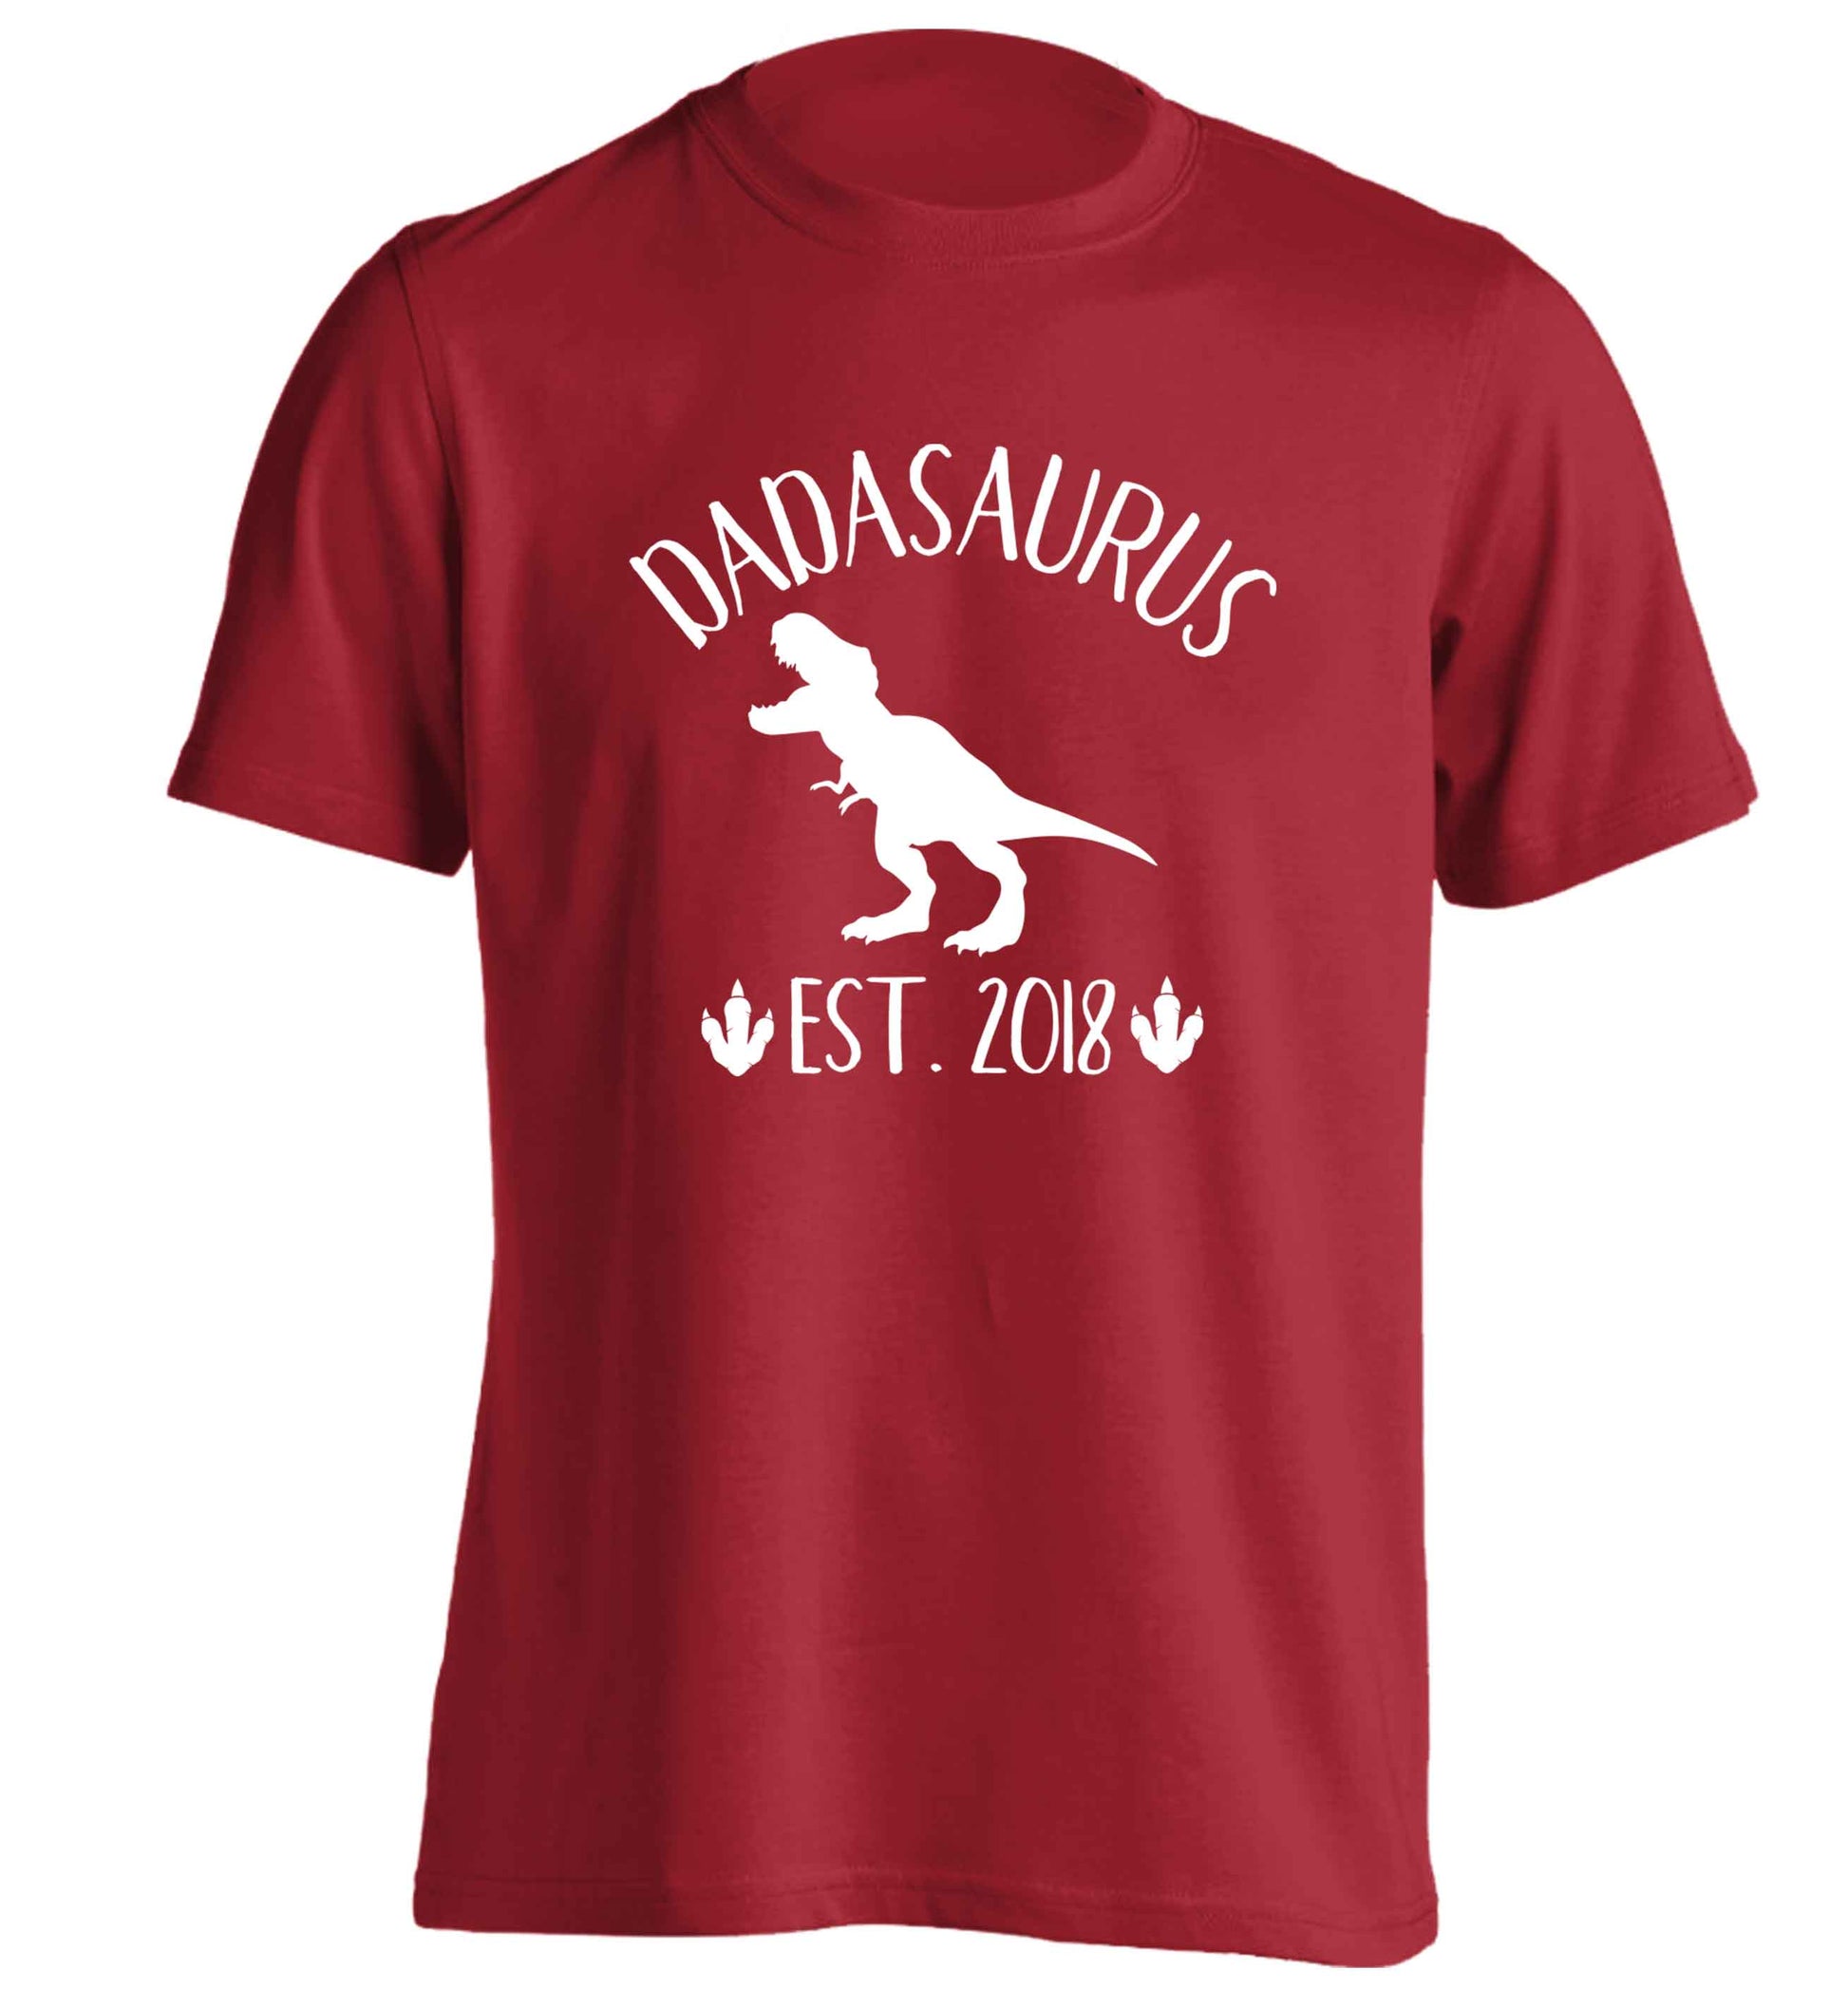 Personalised dadasaurus since (custom date) adults unisex red Tshirt 2XL